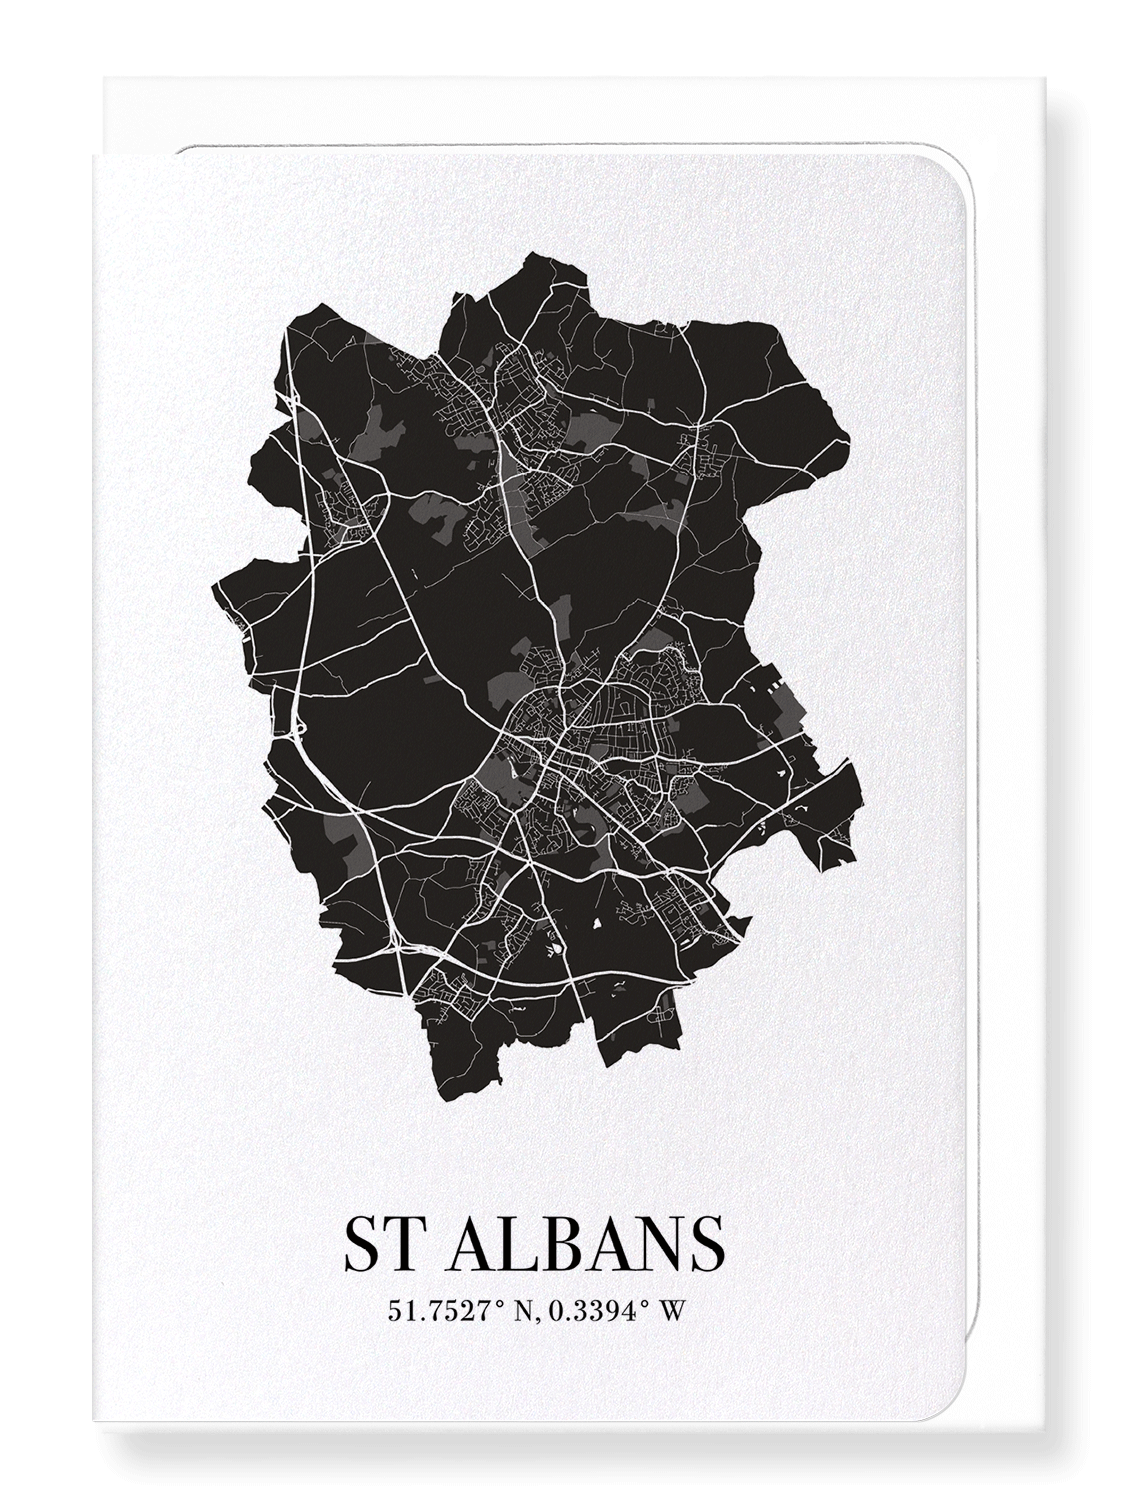 ST. ALBANS CUTOUT: Map Cutout Greeting Card